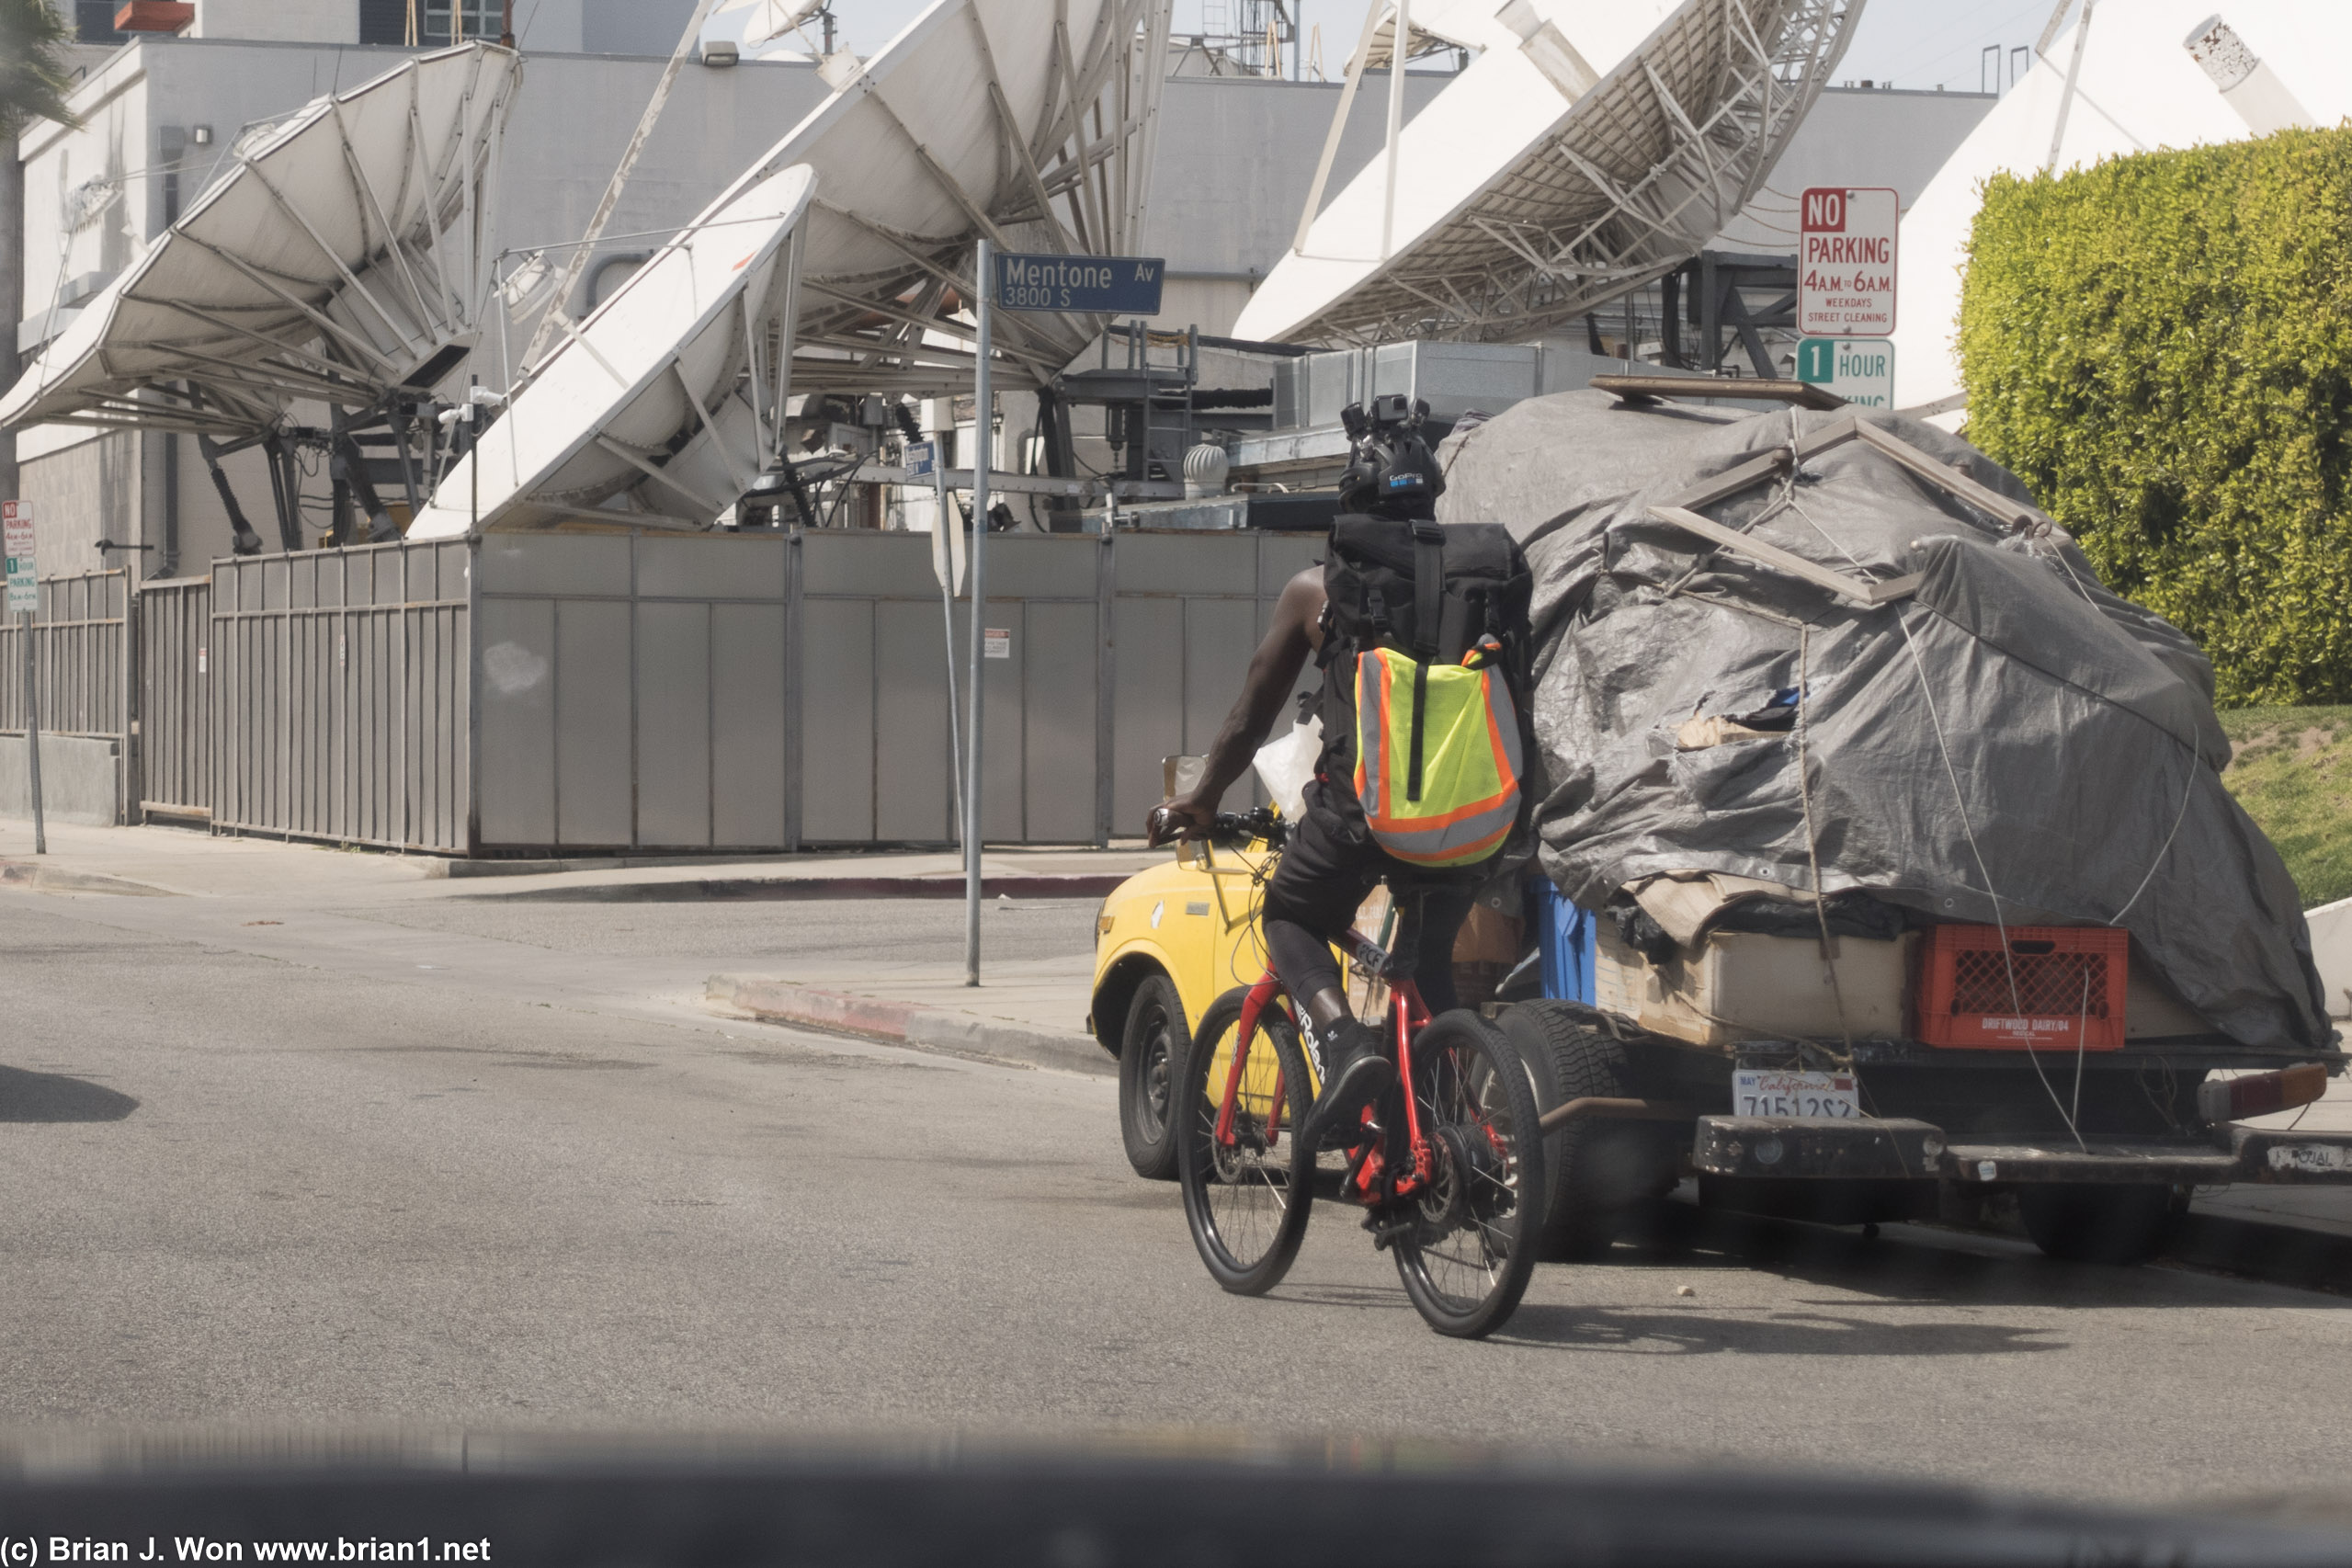 360 degree coverage while riding his e-bike?